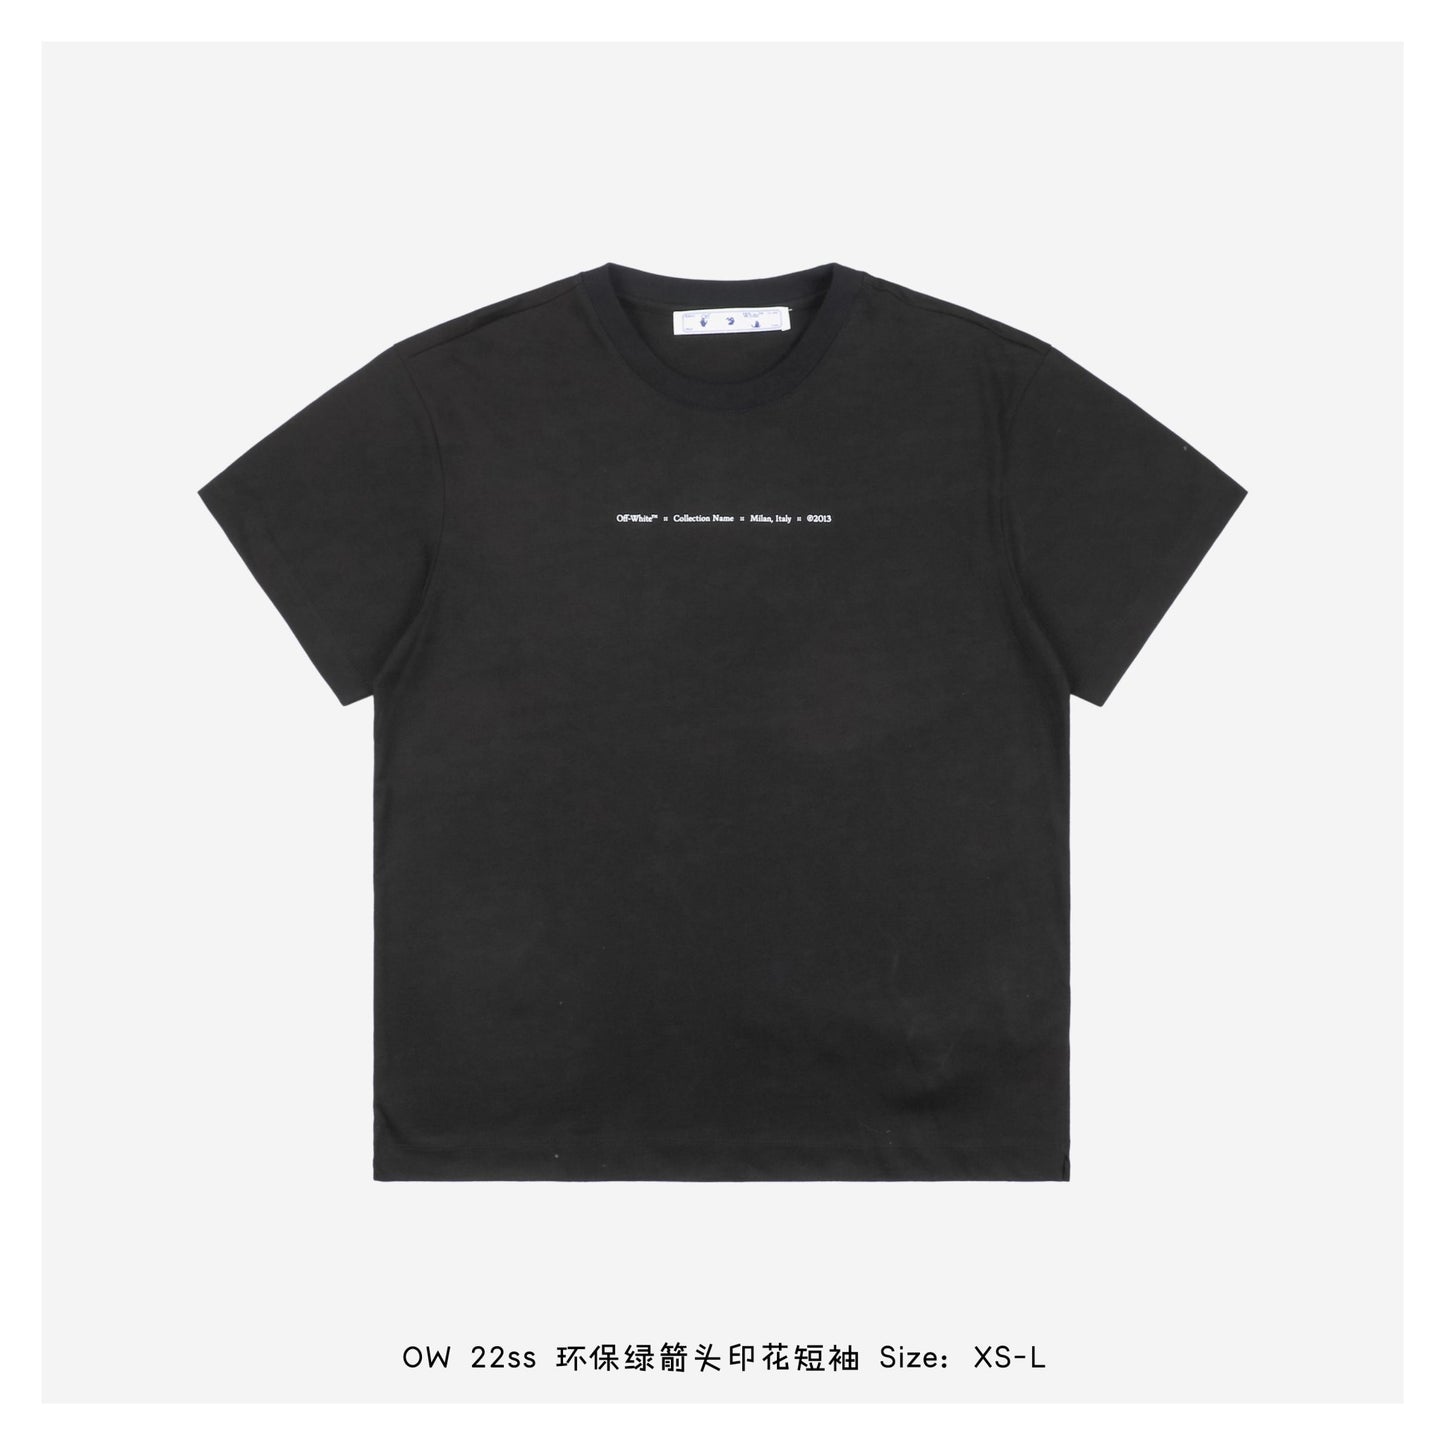 OW 2013 Black T-Shirt